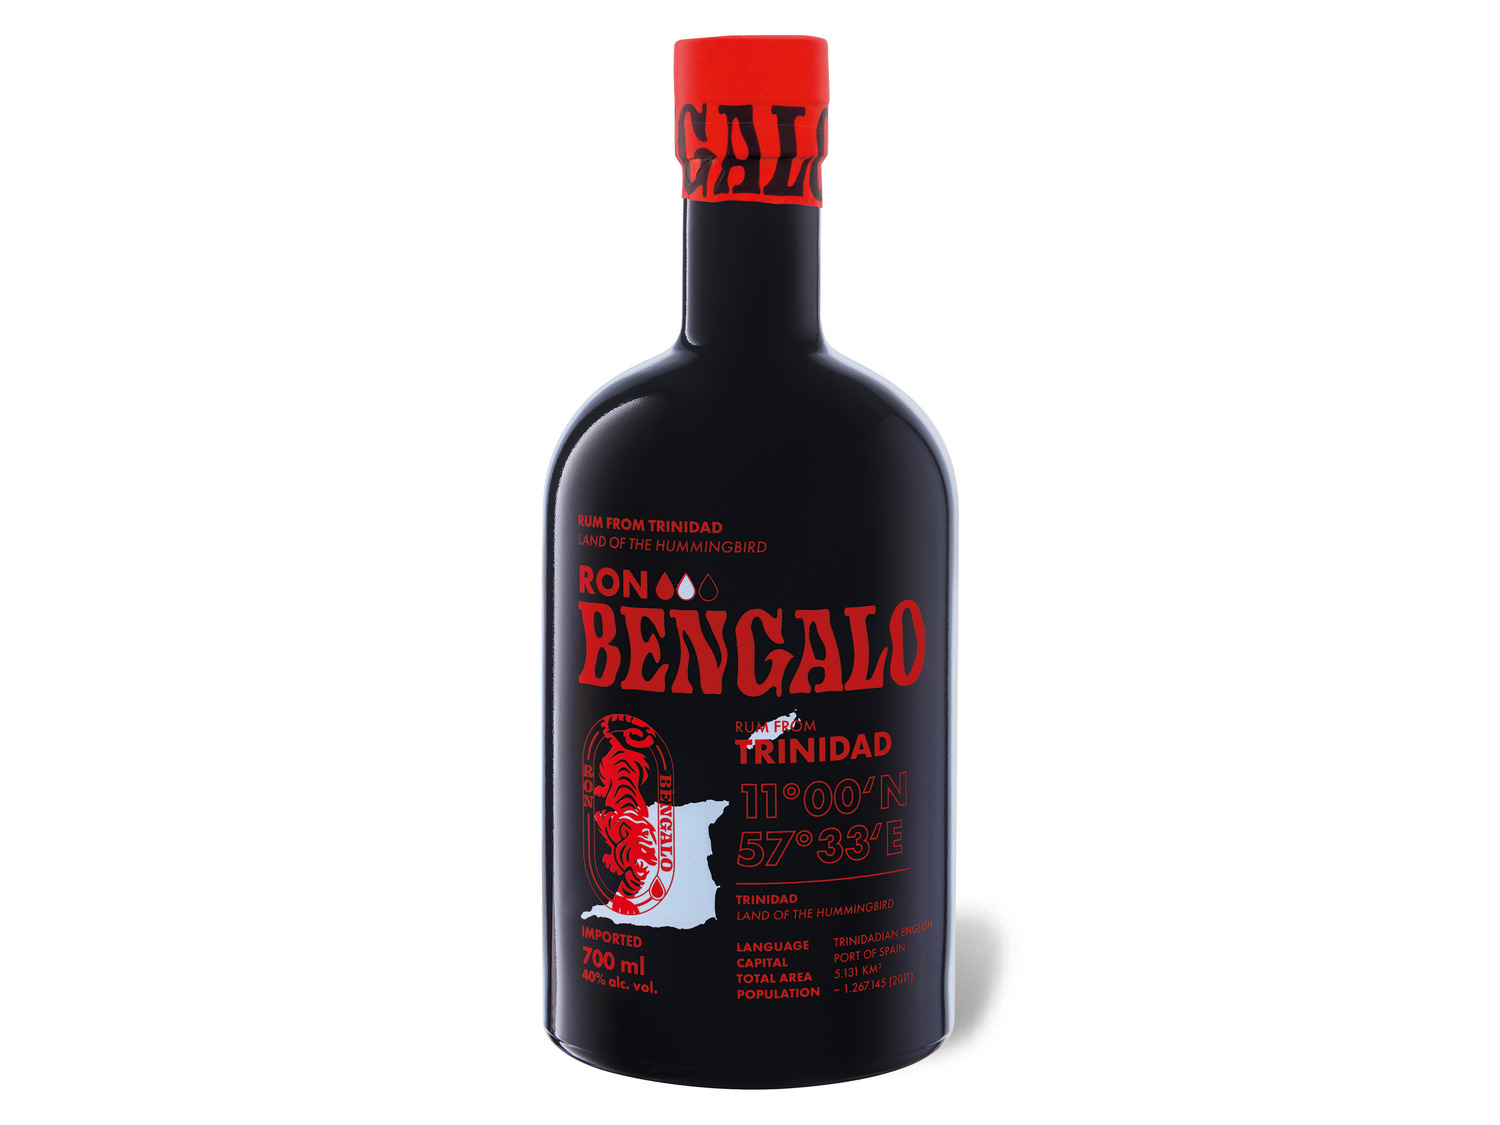 Ron Bengalo Trinidad Rum 40% Vol online kaufen | LIDL